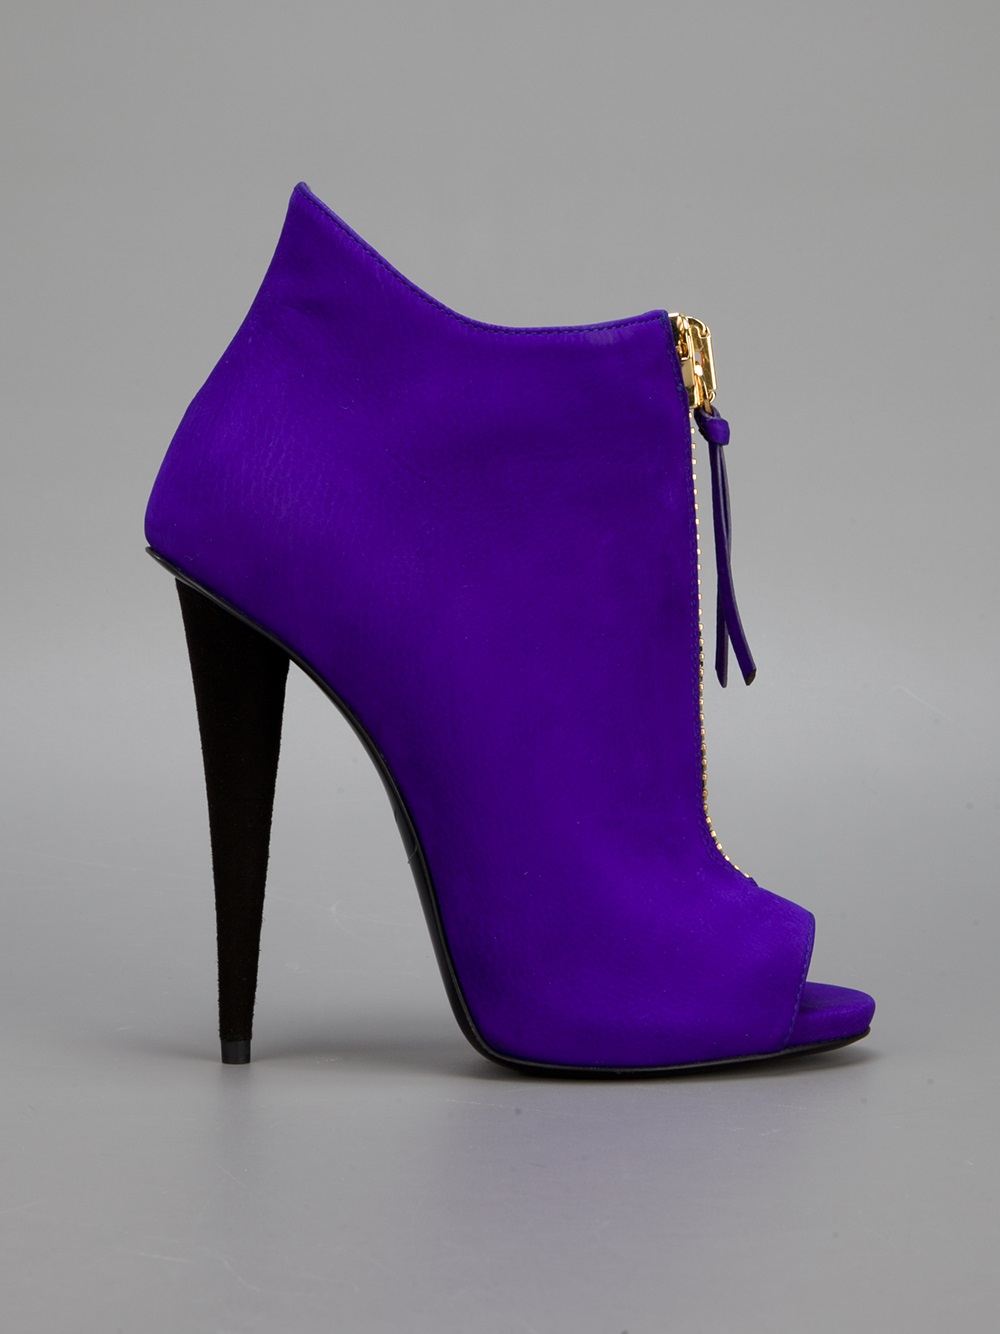 Giuseppe Zanotti Zipped Peep Toe Booties in Purple | Lyst